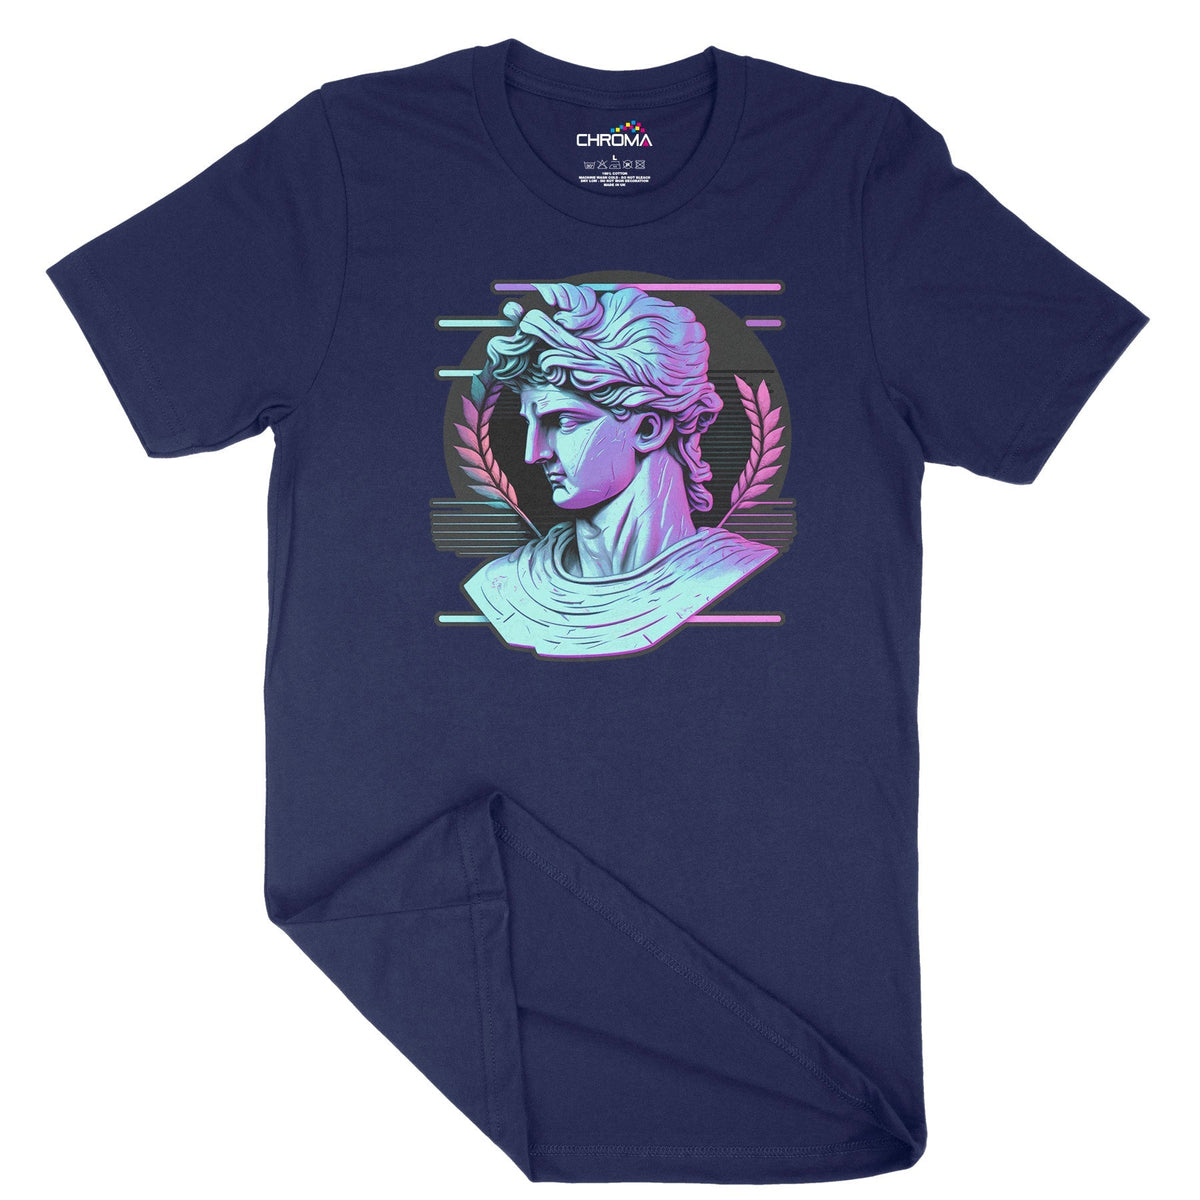 Ancient Man Unisex Adult T-Shirt Chroma Clothing